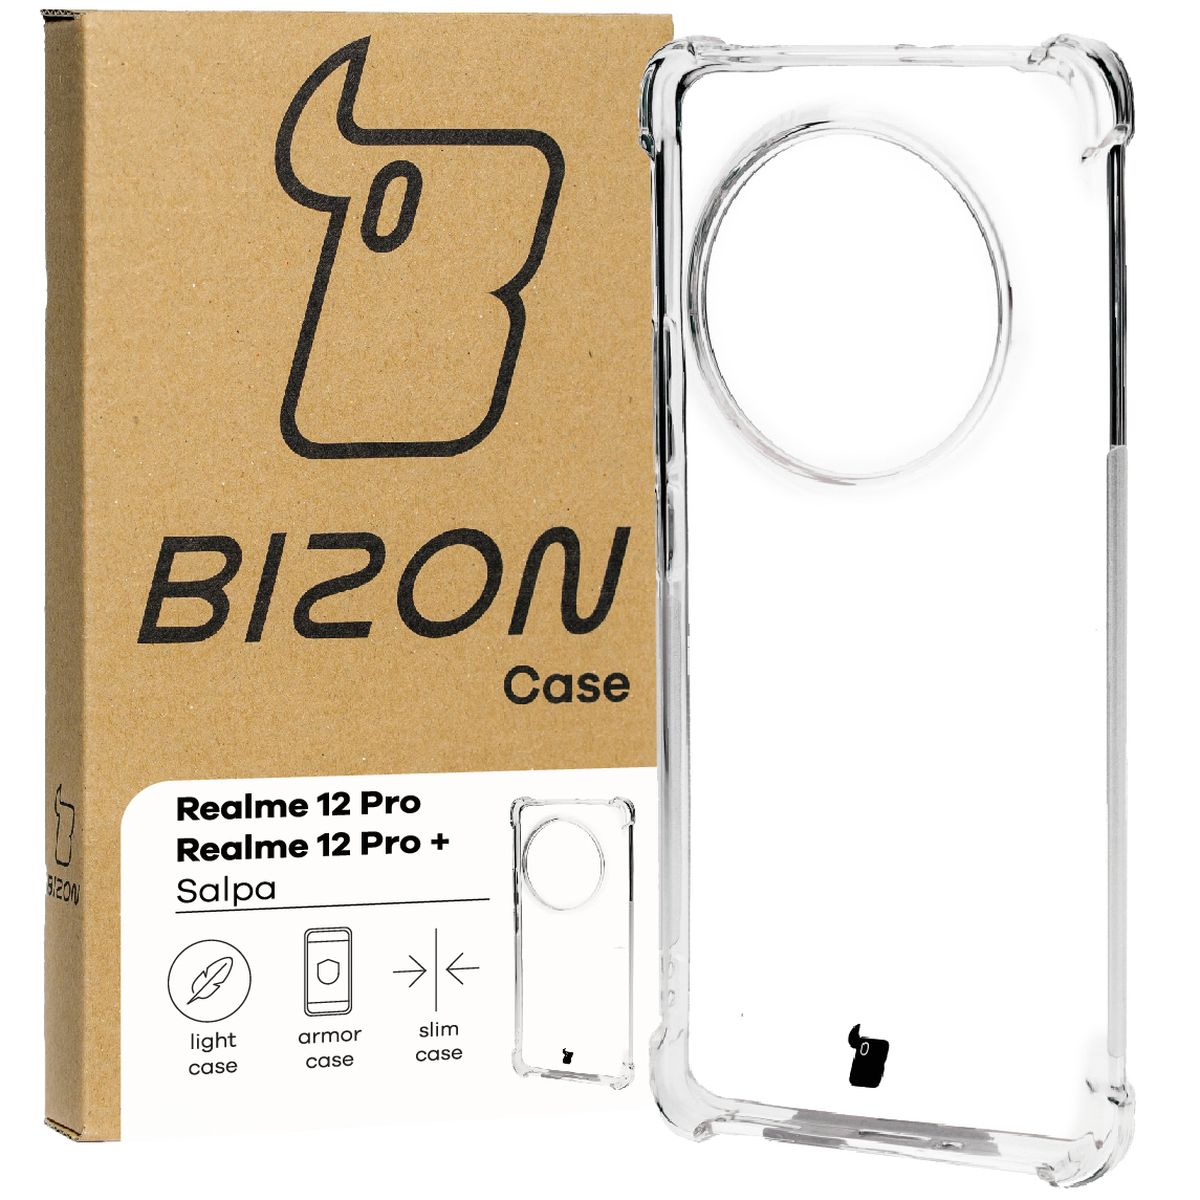 Schutzhülle für Realme 12 Pro/12 Pro+, Bizon Case Salpa, Transparent